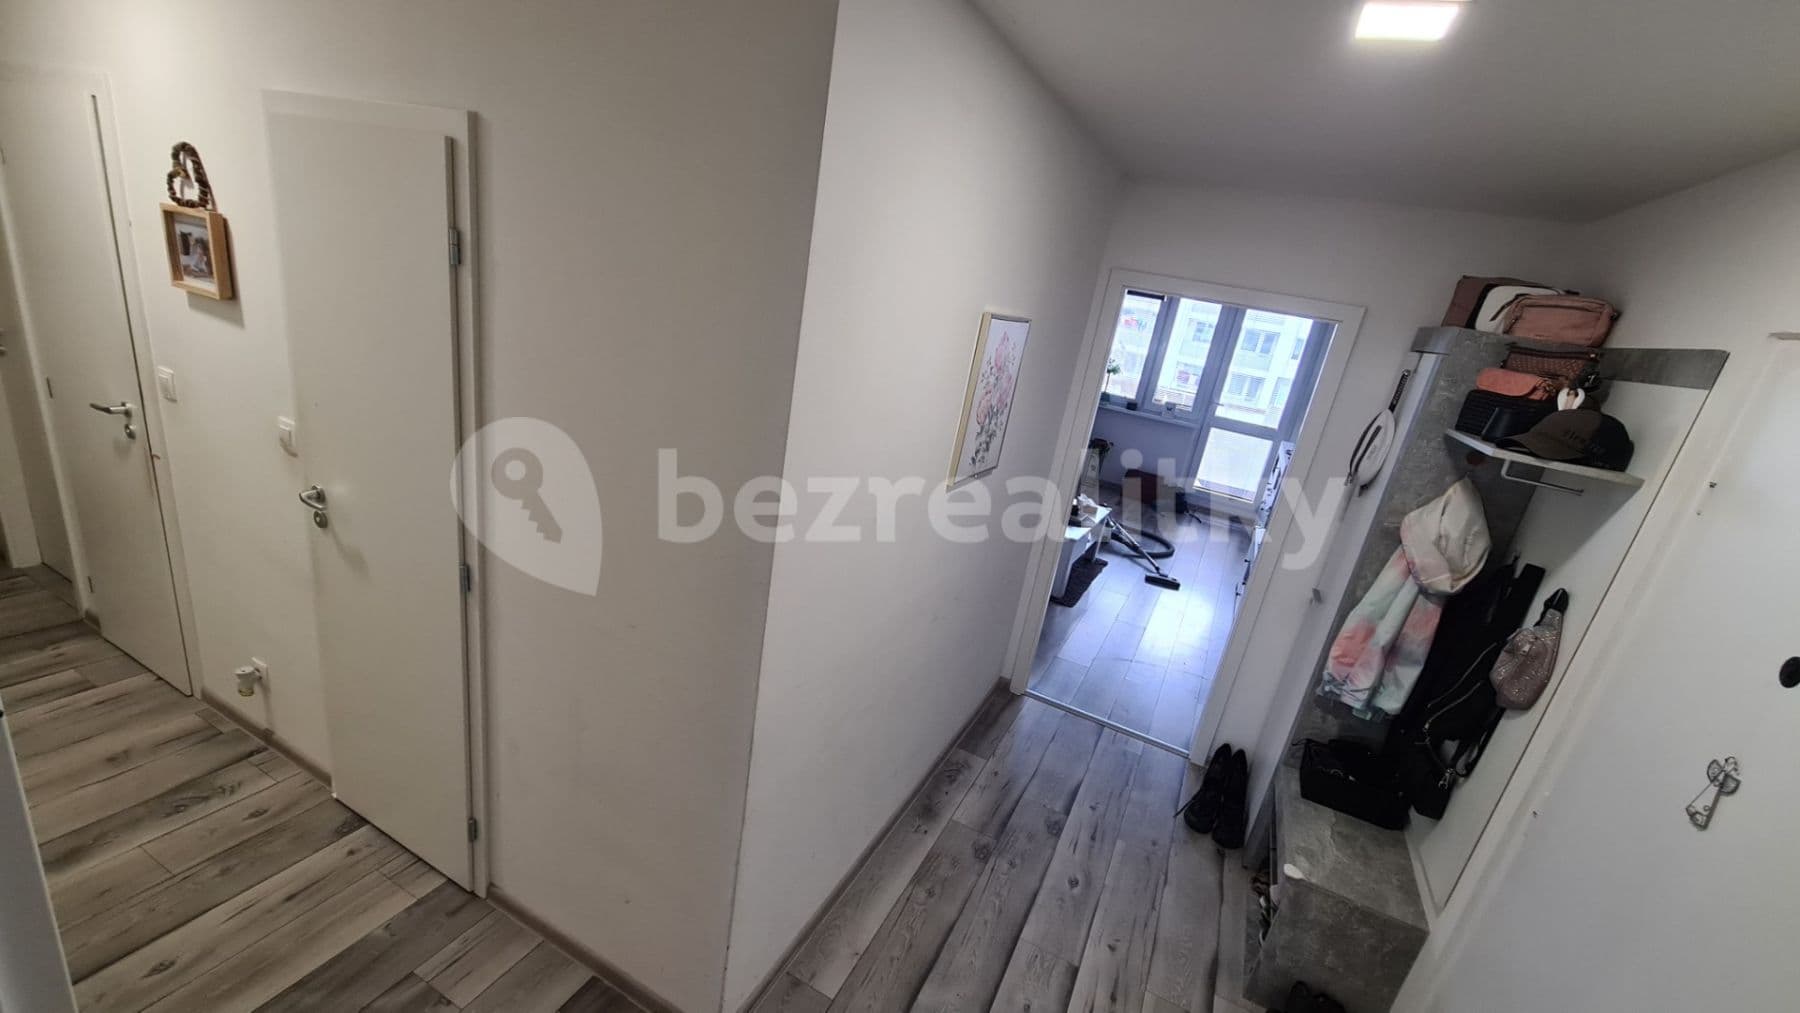 2 bedroom with open-plan kitchen flat to rent, 75 m², Přecechtělova, Prague, Prague